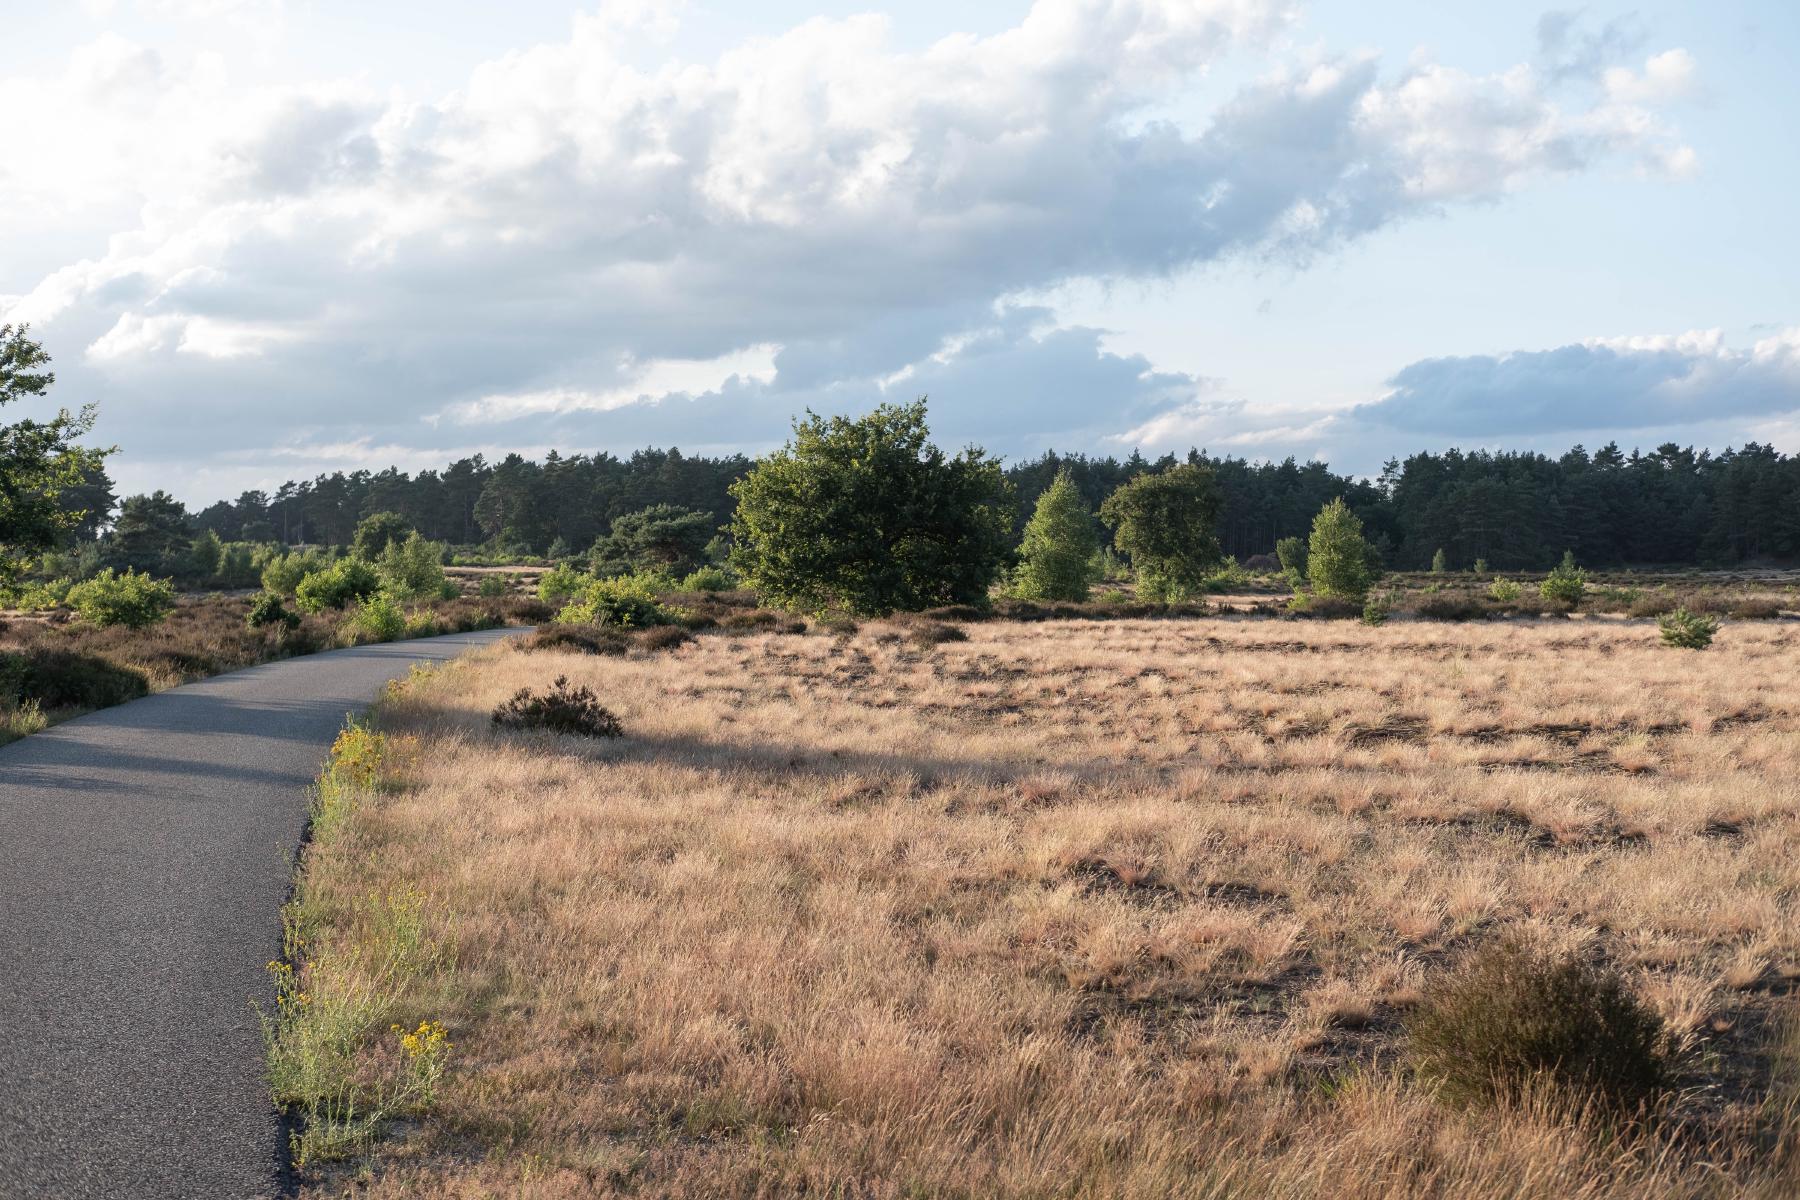 a bikepath through a grassy heathland